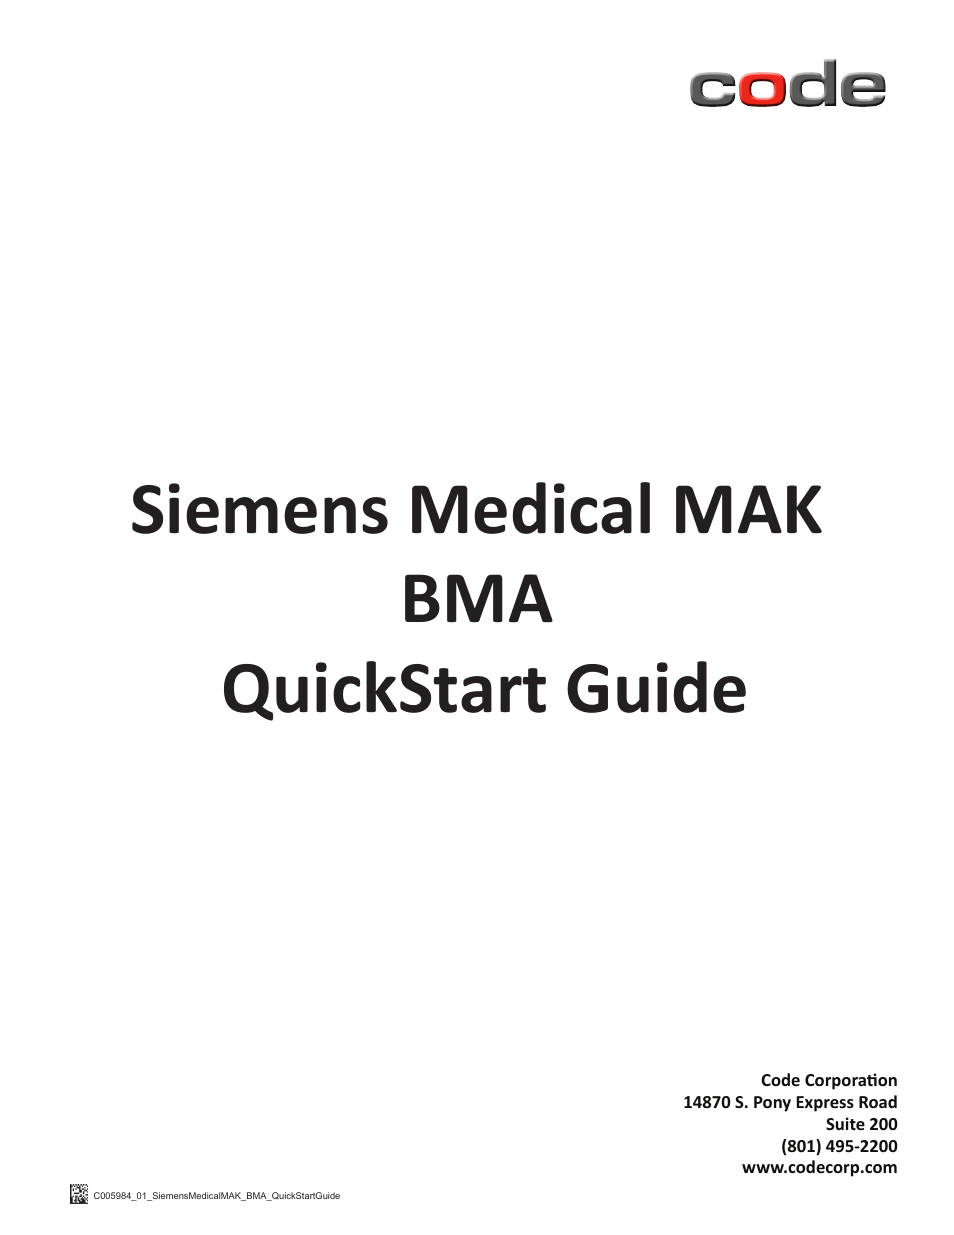 CR1200 Siemens Medical MAK HIS Quick Start